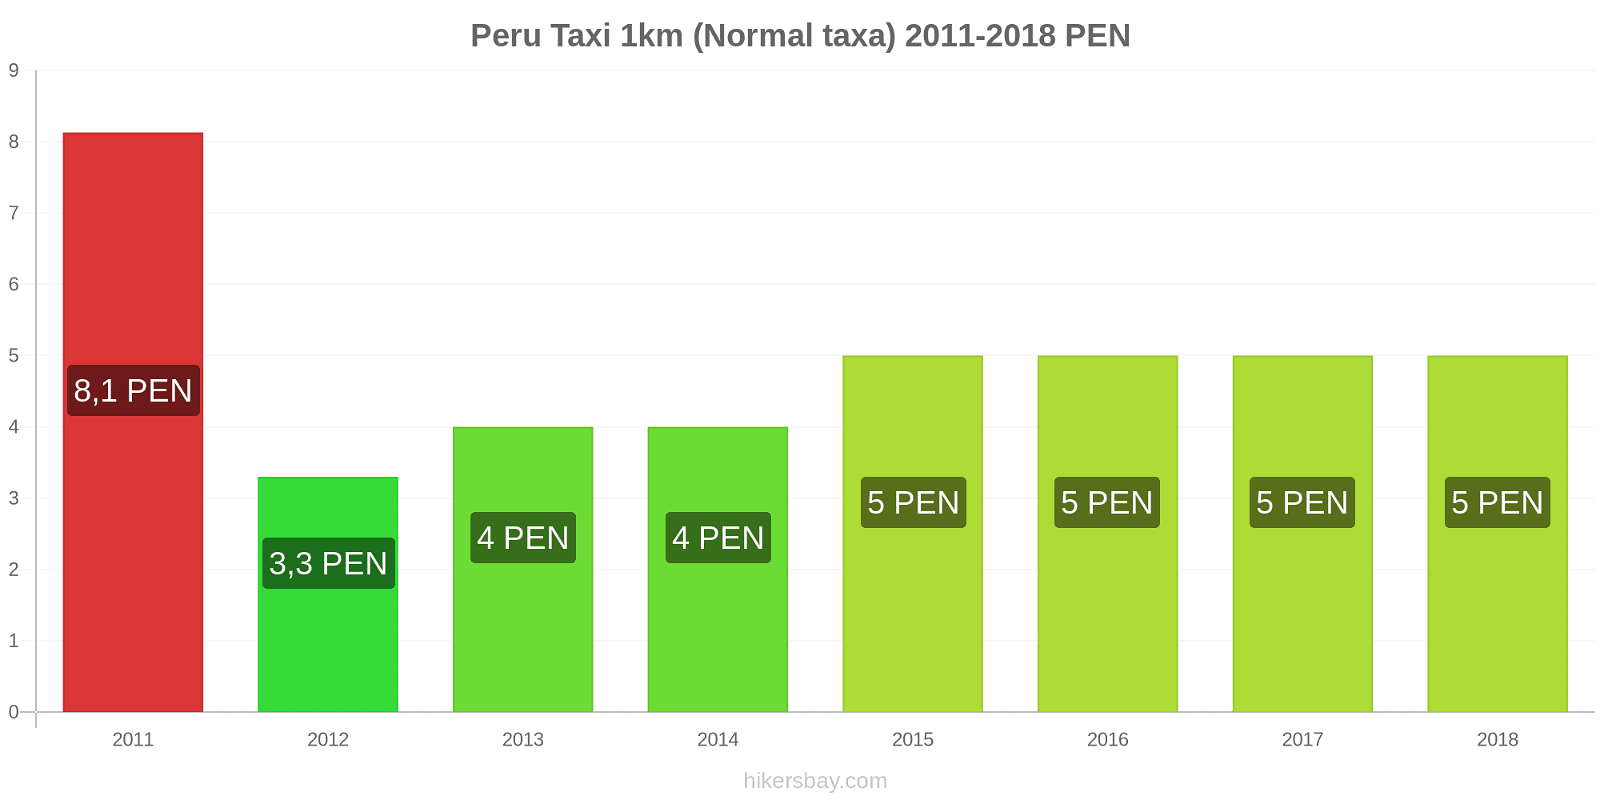 Peru prisändringar Taxi 1km (Normal taxa) hikersbay.com